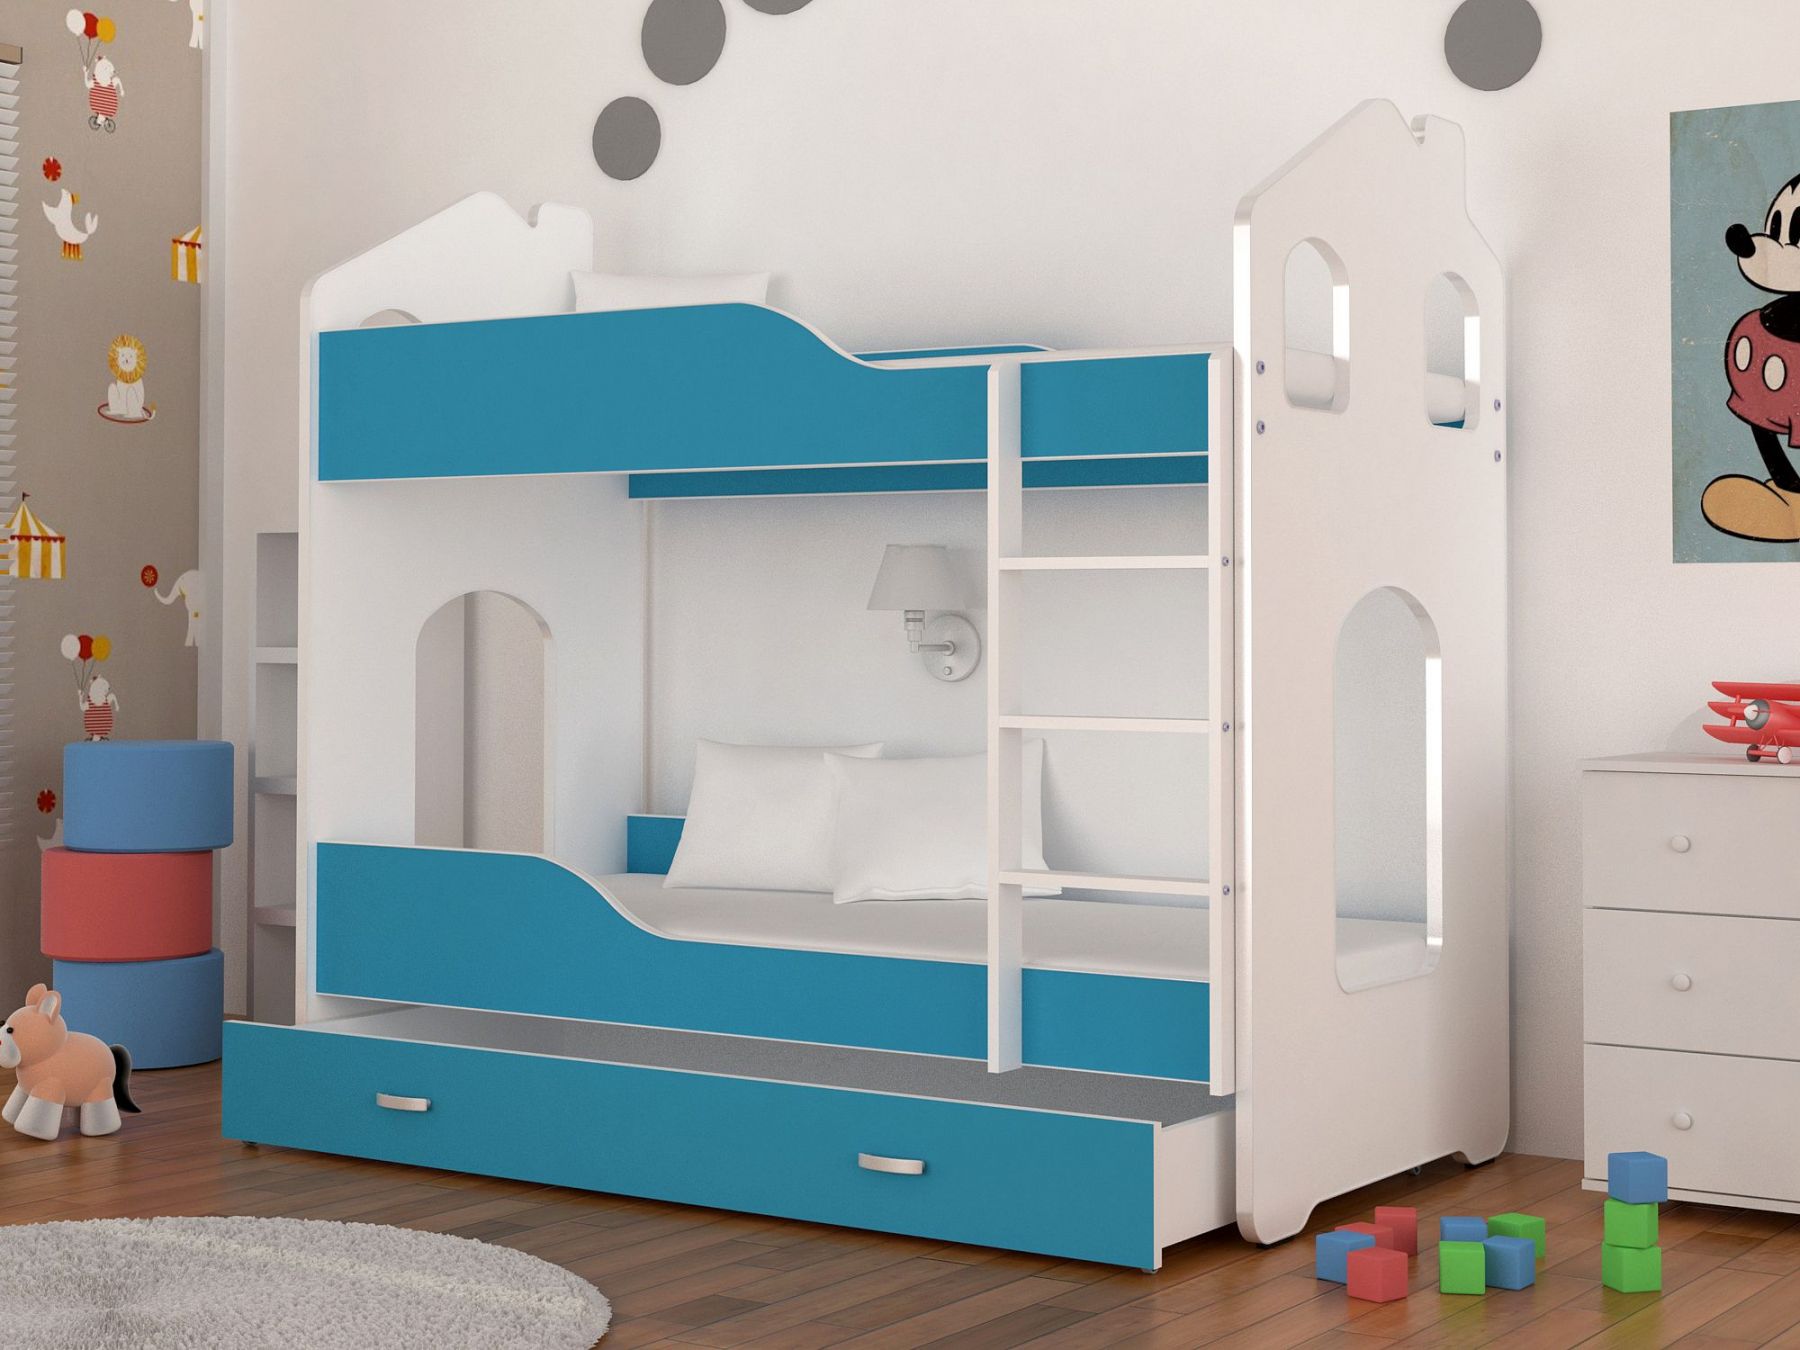 Expedo Dětská patrová postel PATRIK 2 Domek + matrace + rošt ZDARMA, 160x80, bílá/modrá - Expedo s.r.o.